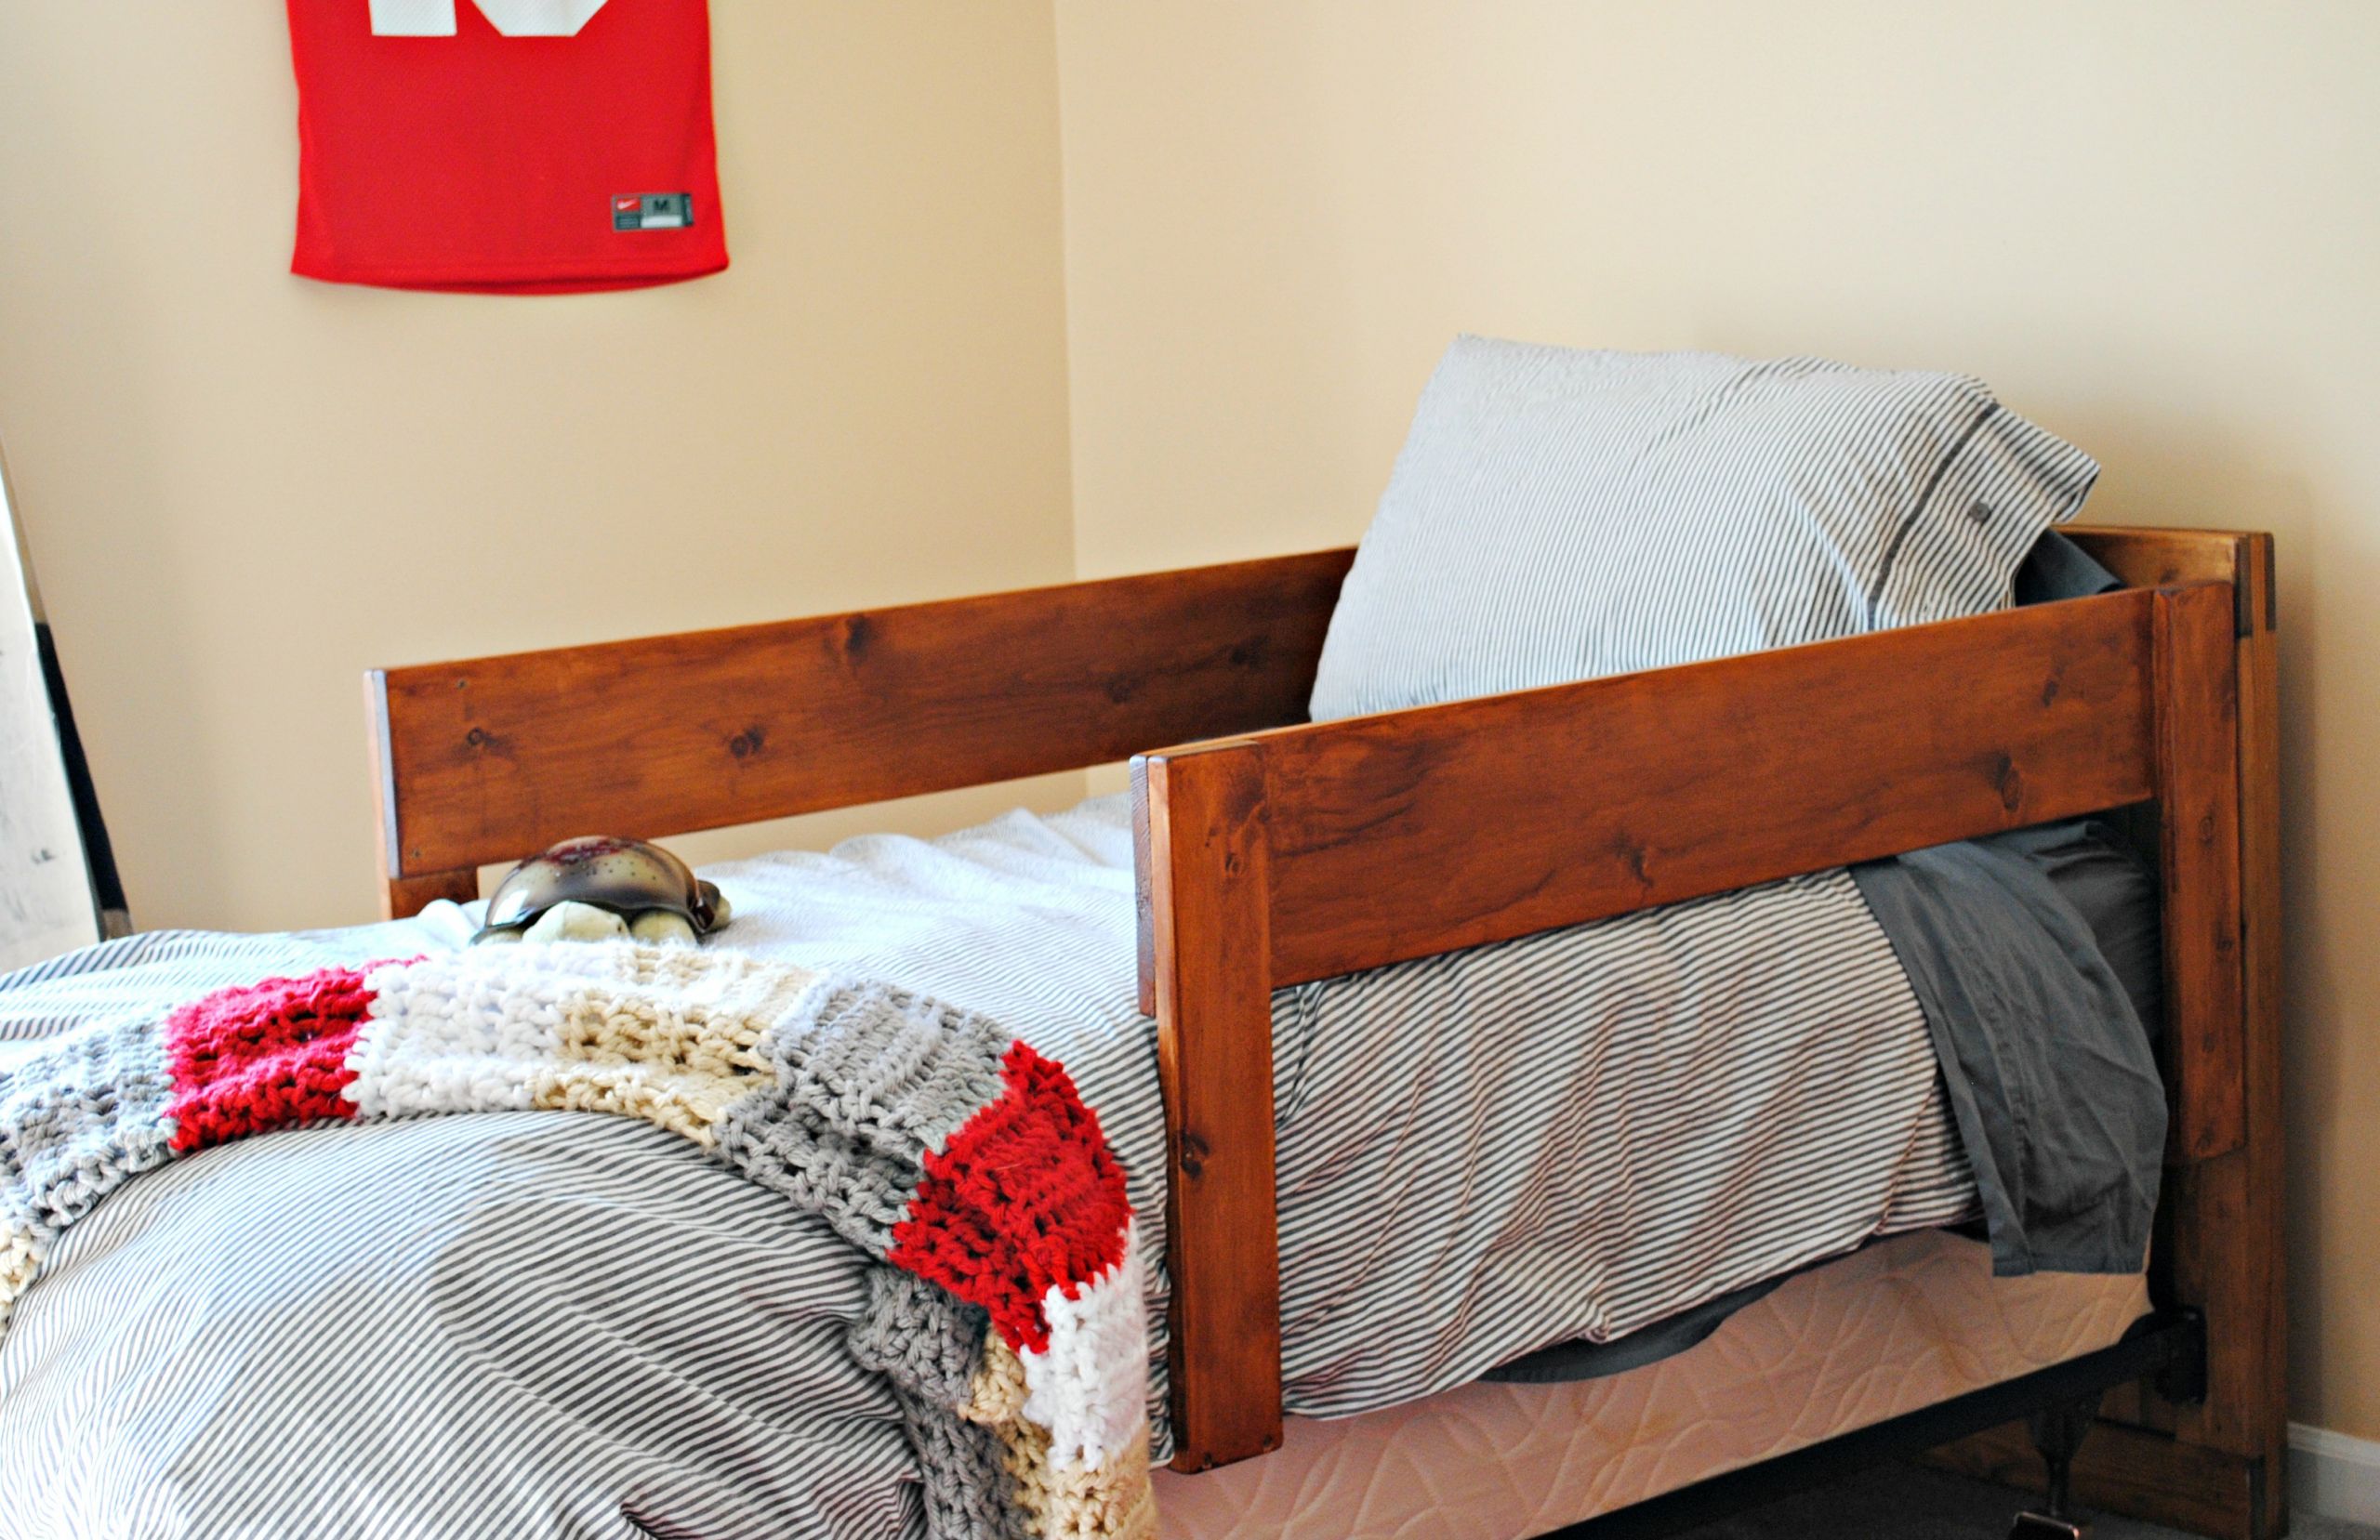 Toddler Bed Rail DIY
 DIY Toddler Bed Rails Place in Progress